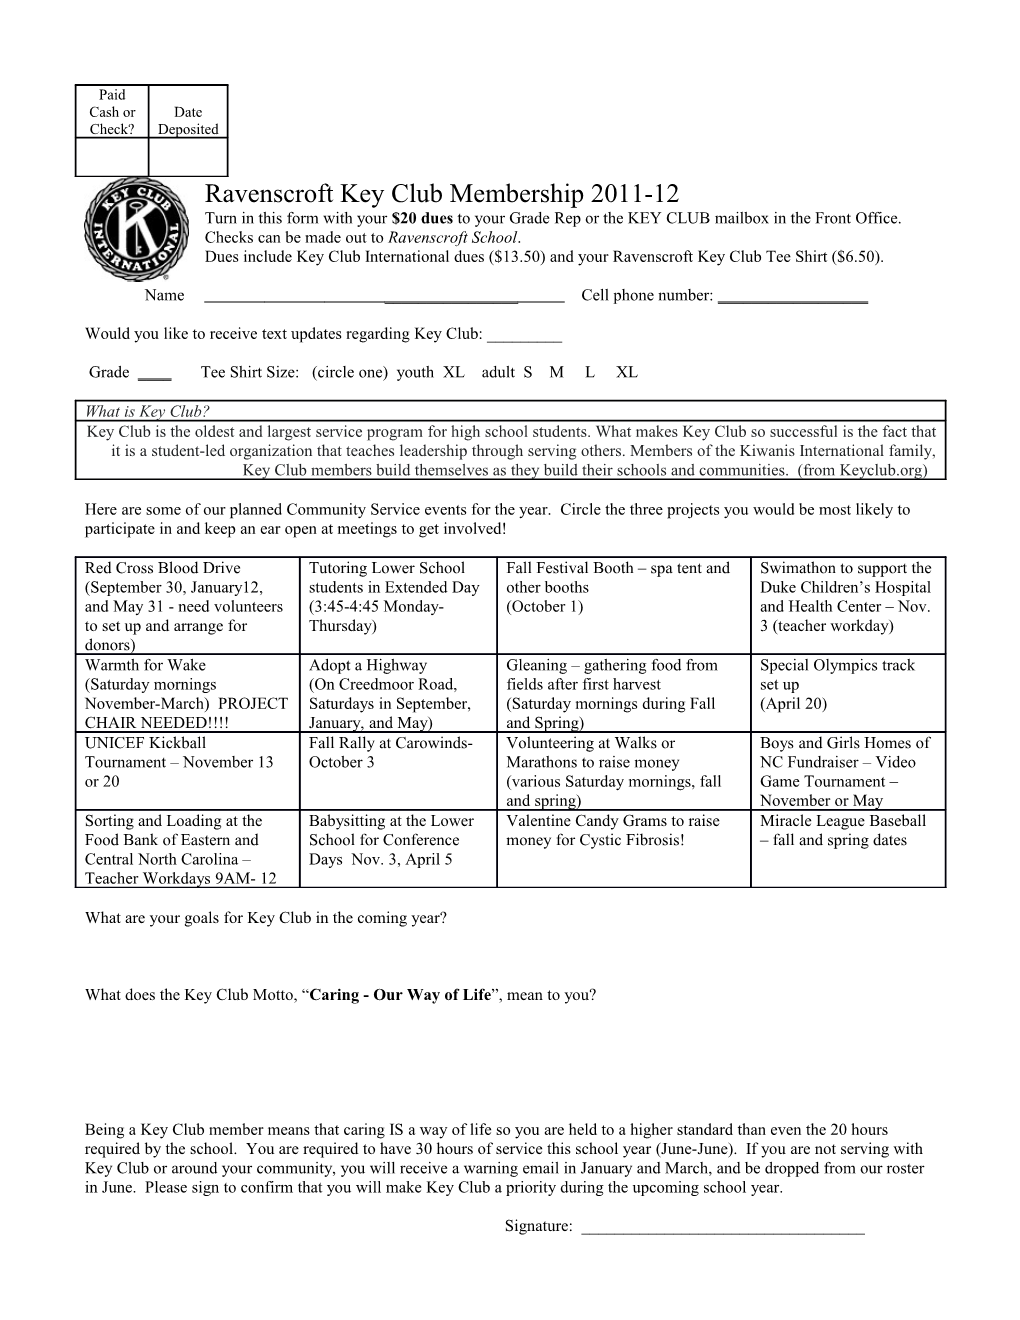 Key Club Information Sheet